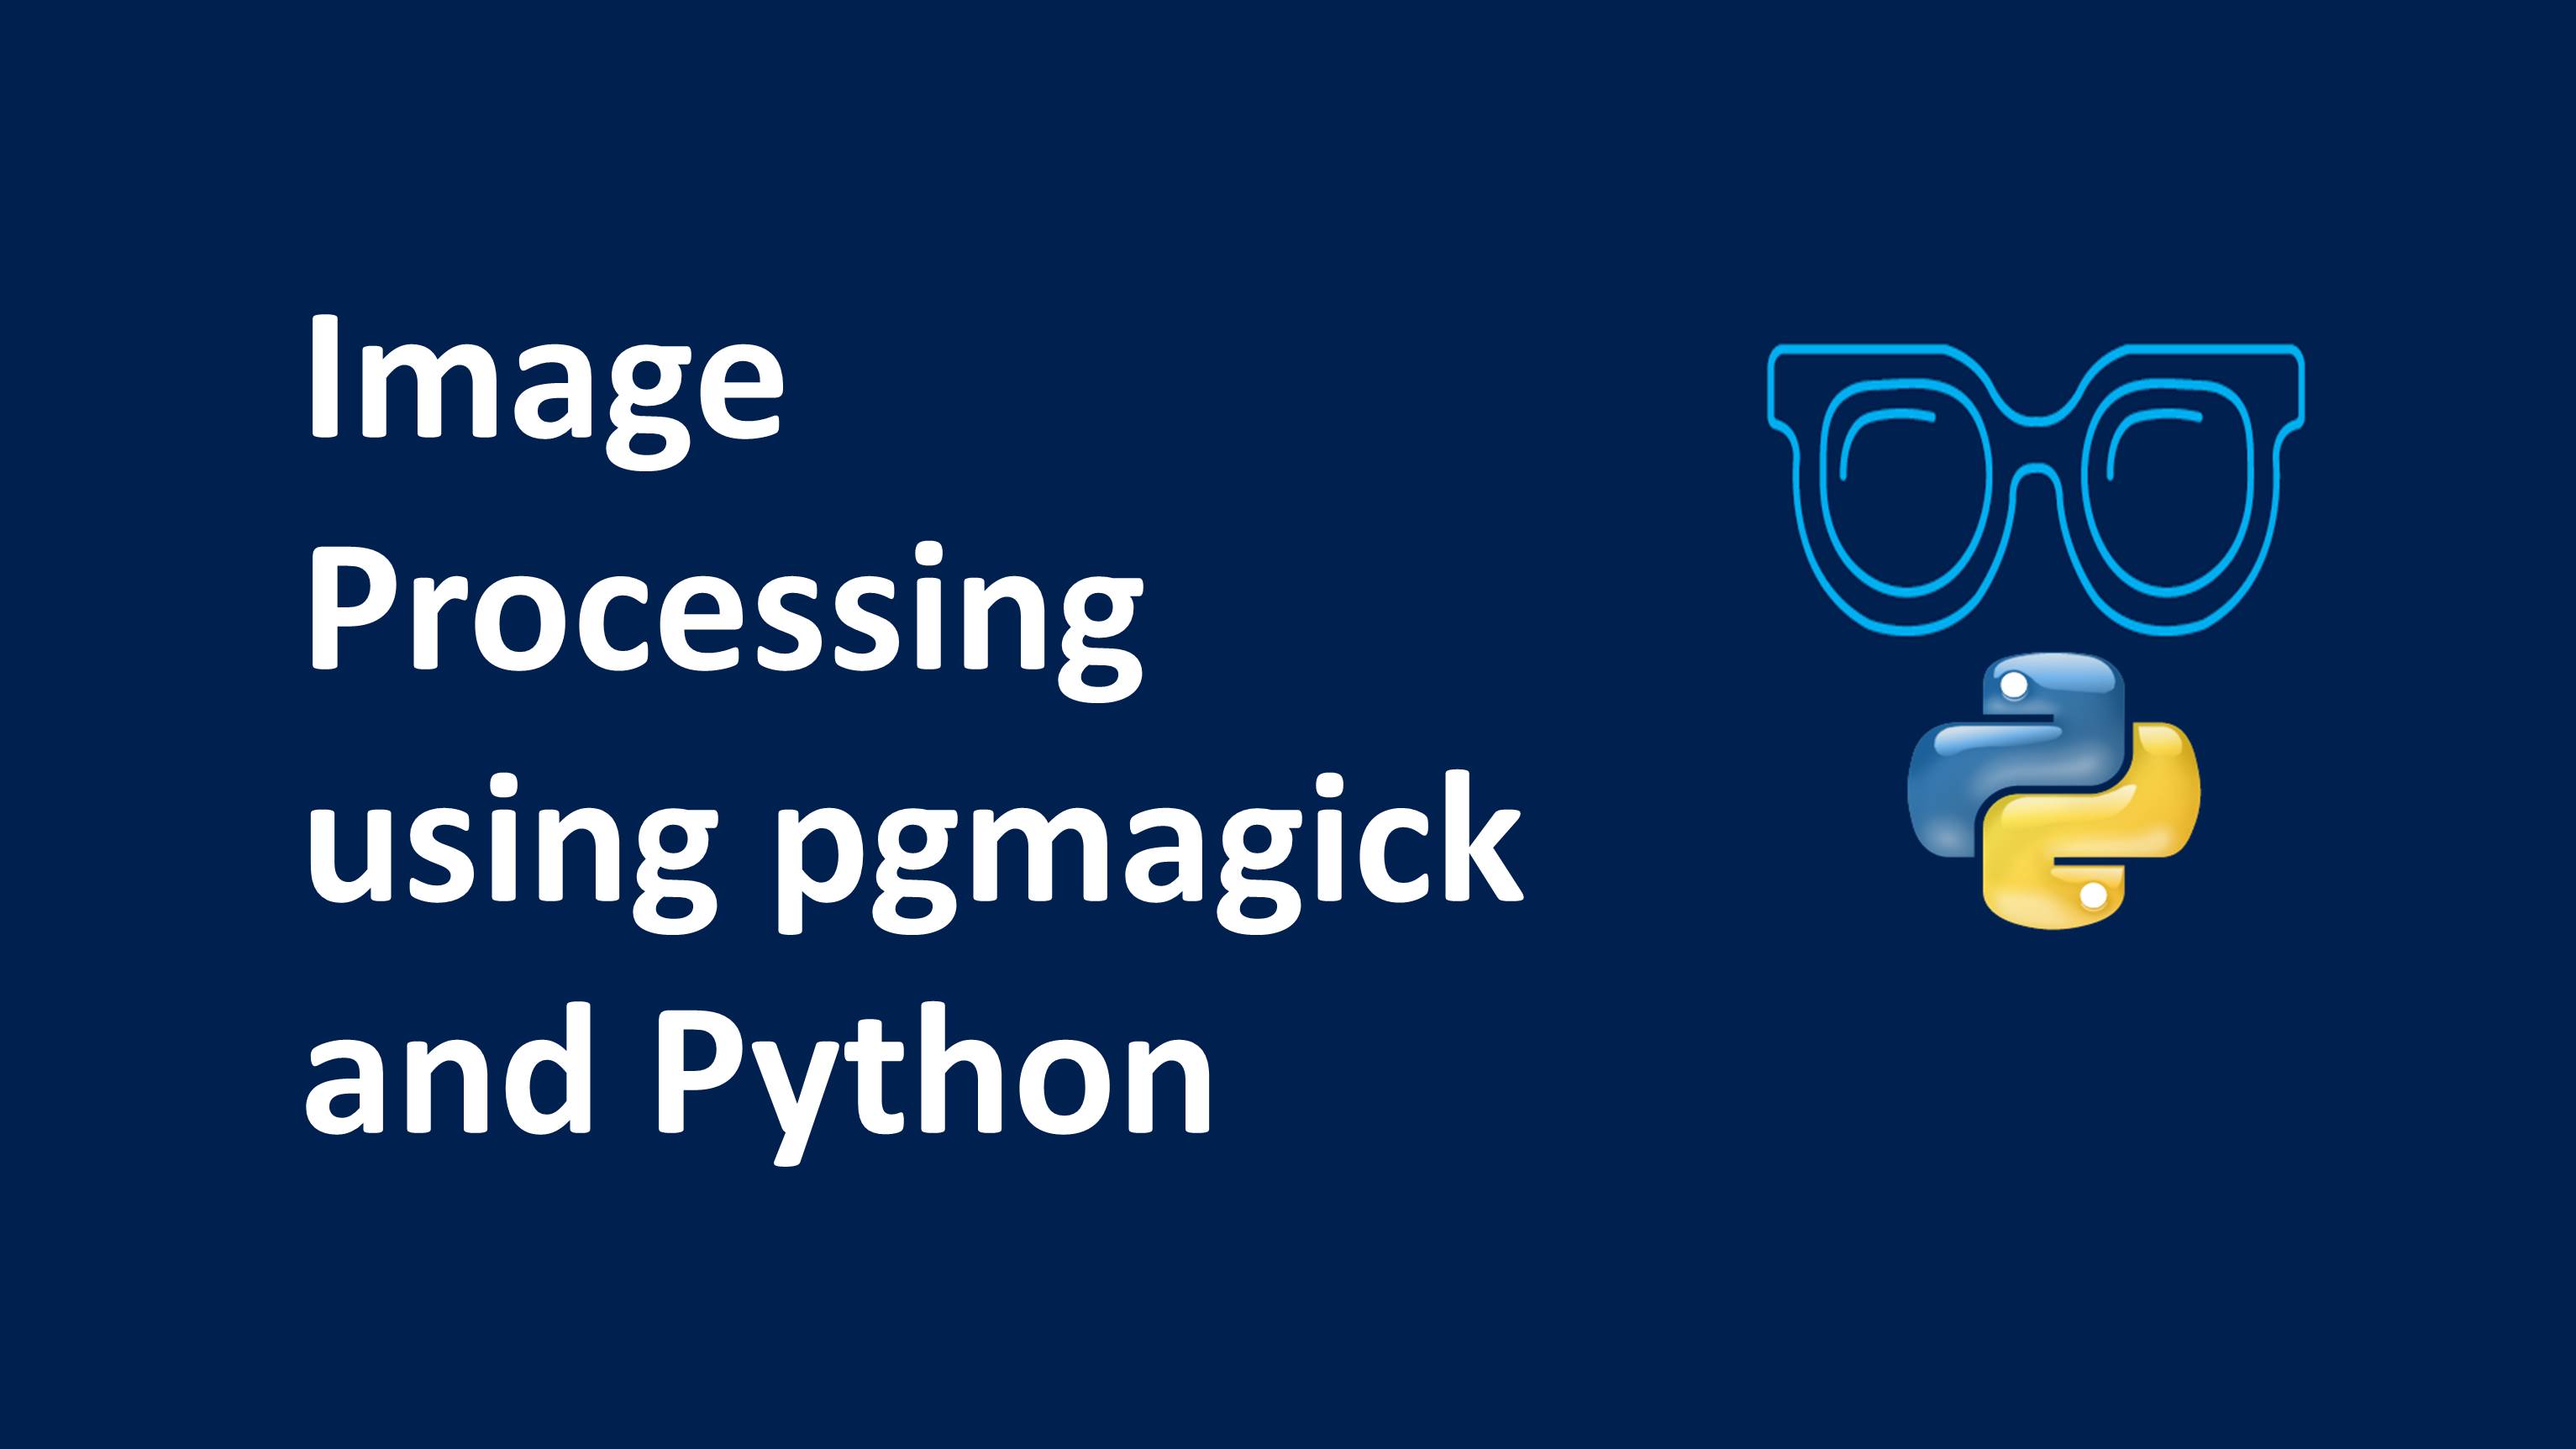 Image Processing using pgmagick and Python